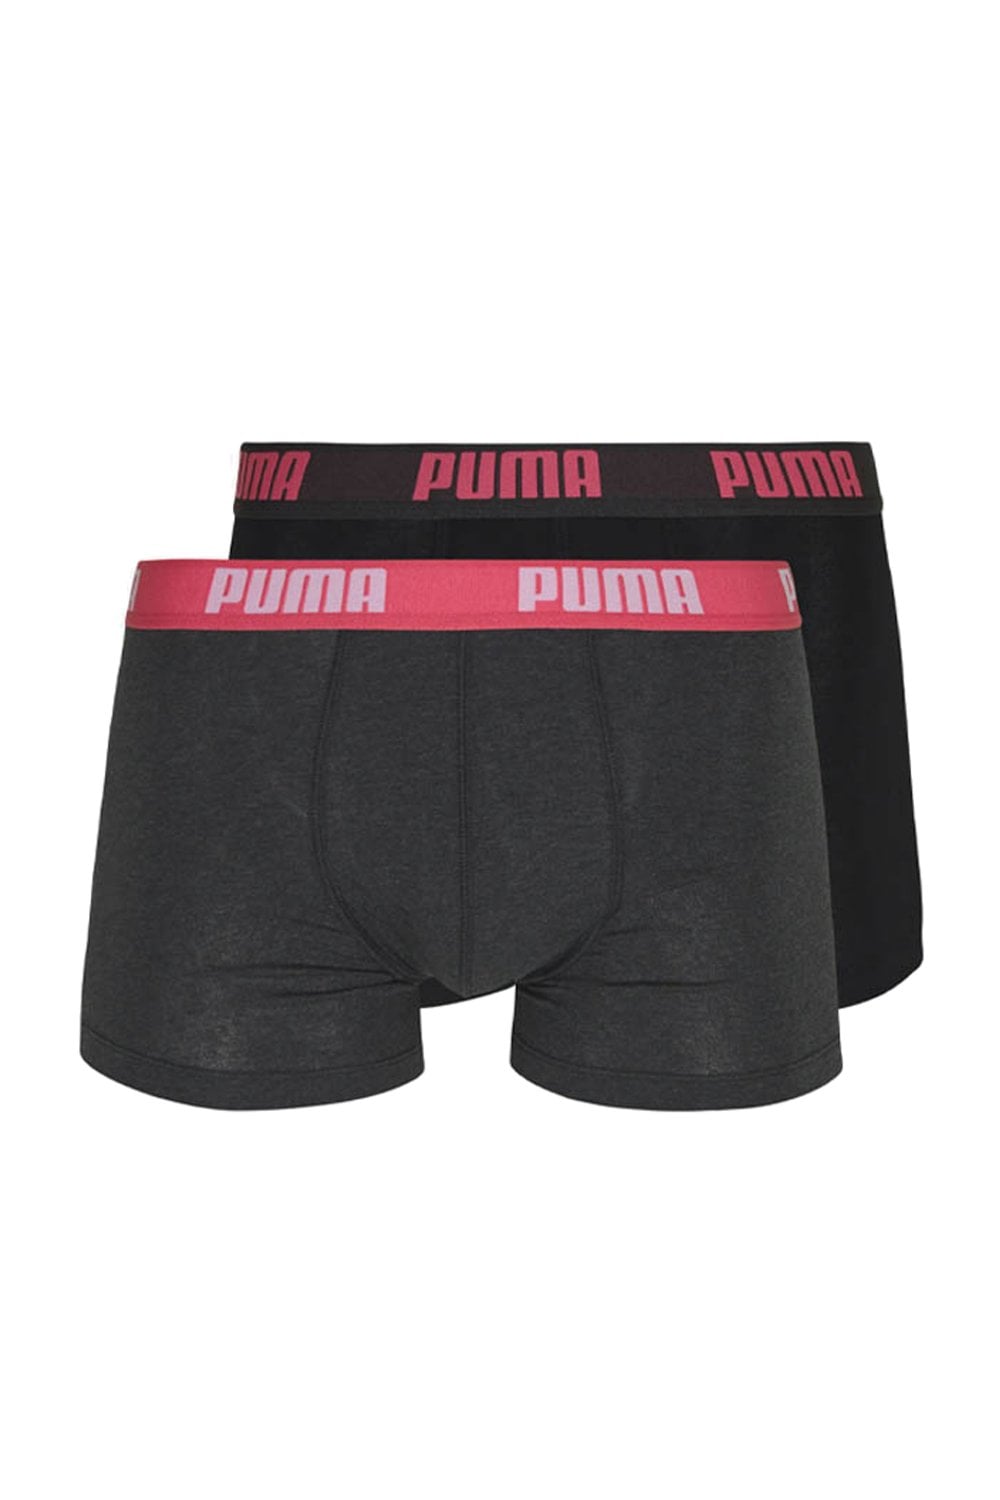 Pack of 2 Puma Basic Boxers